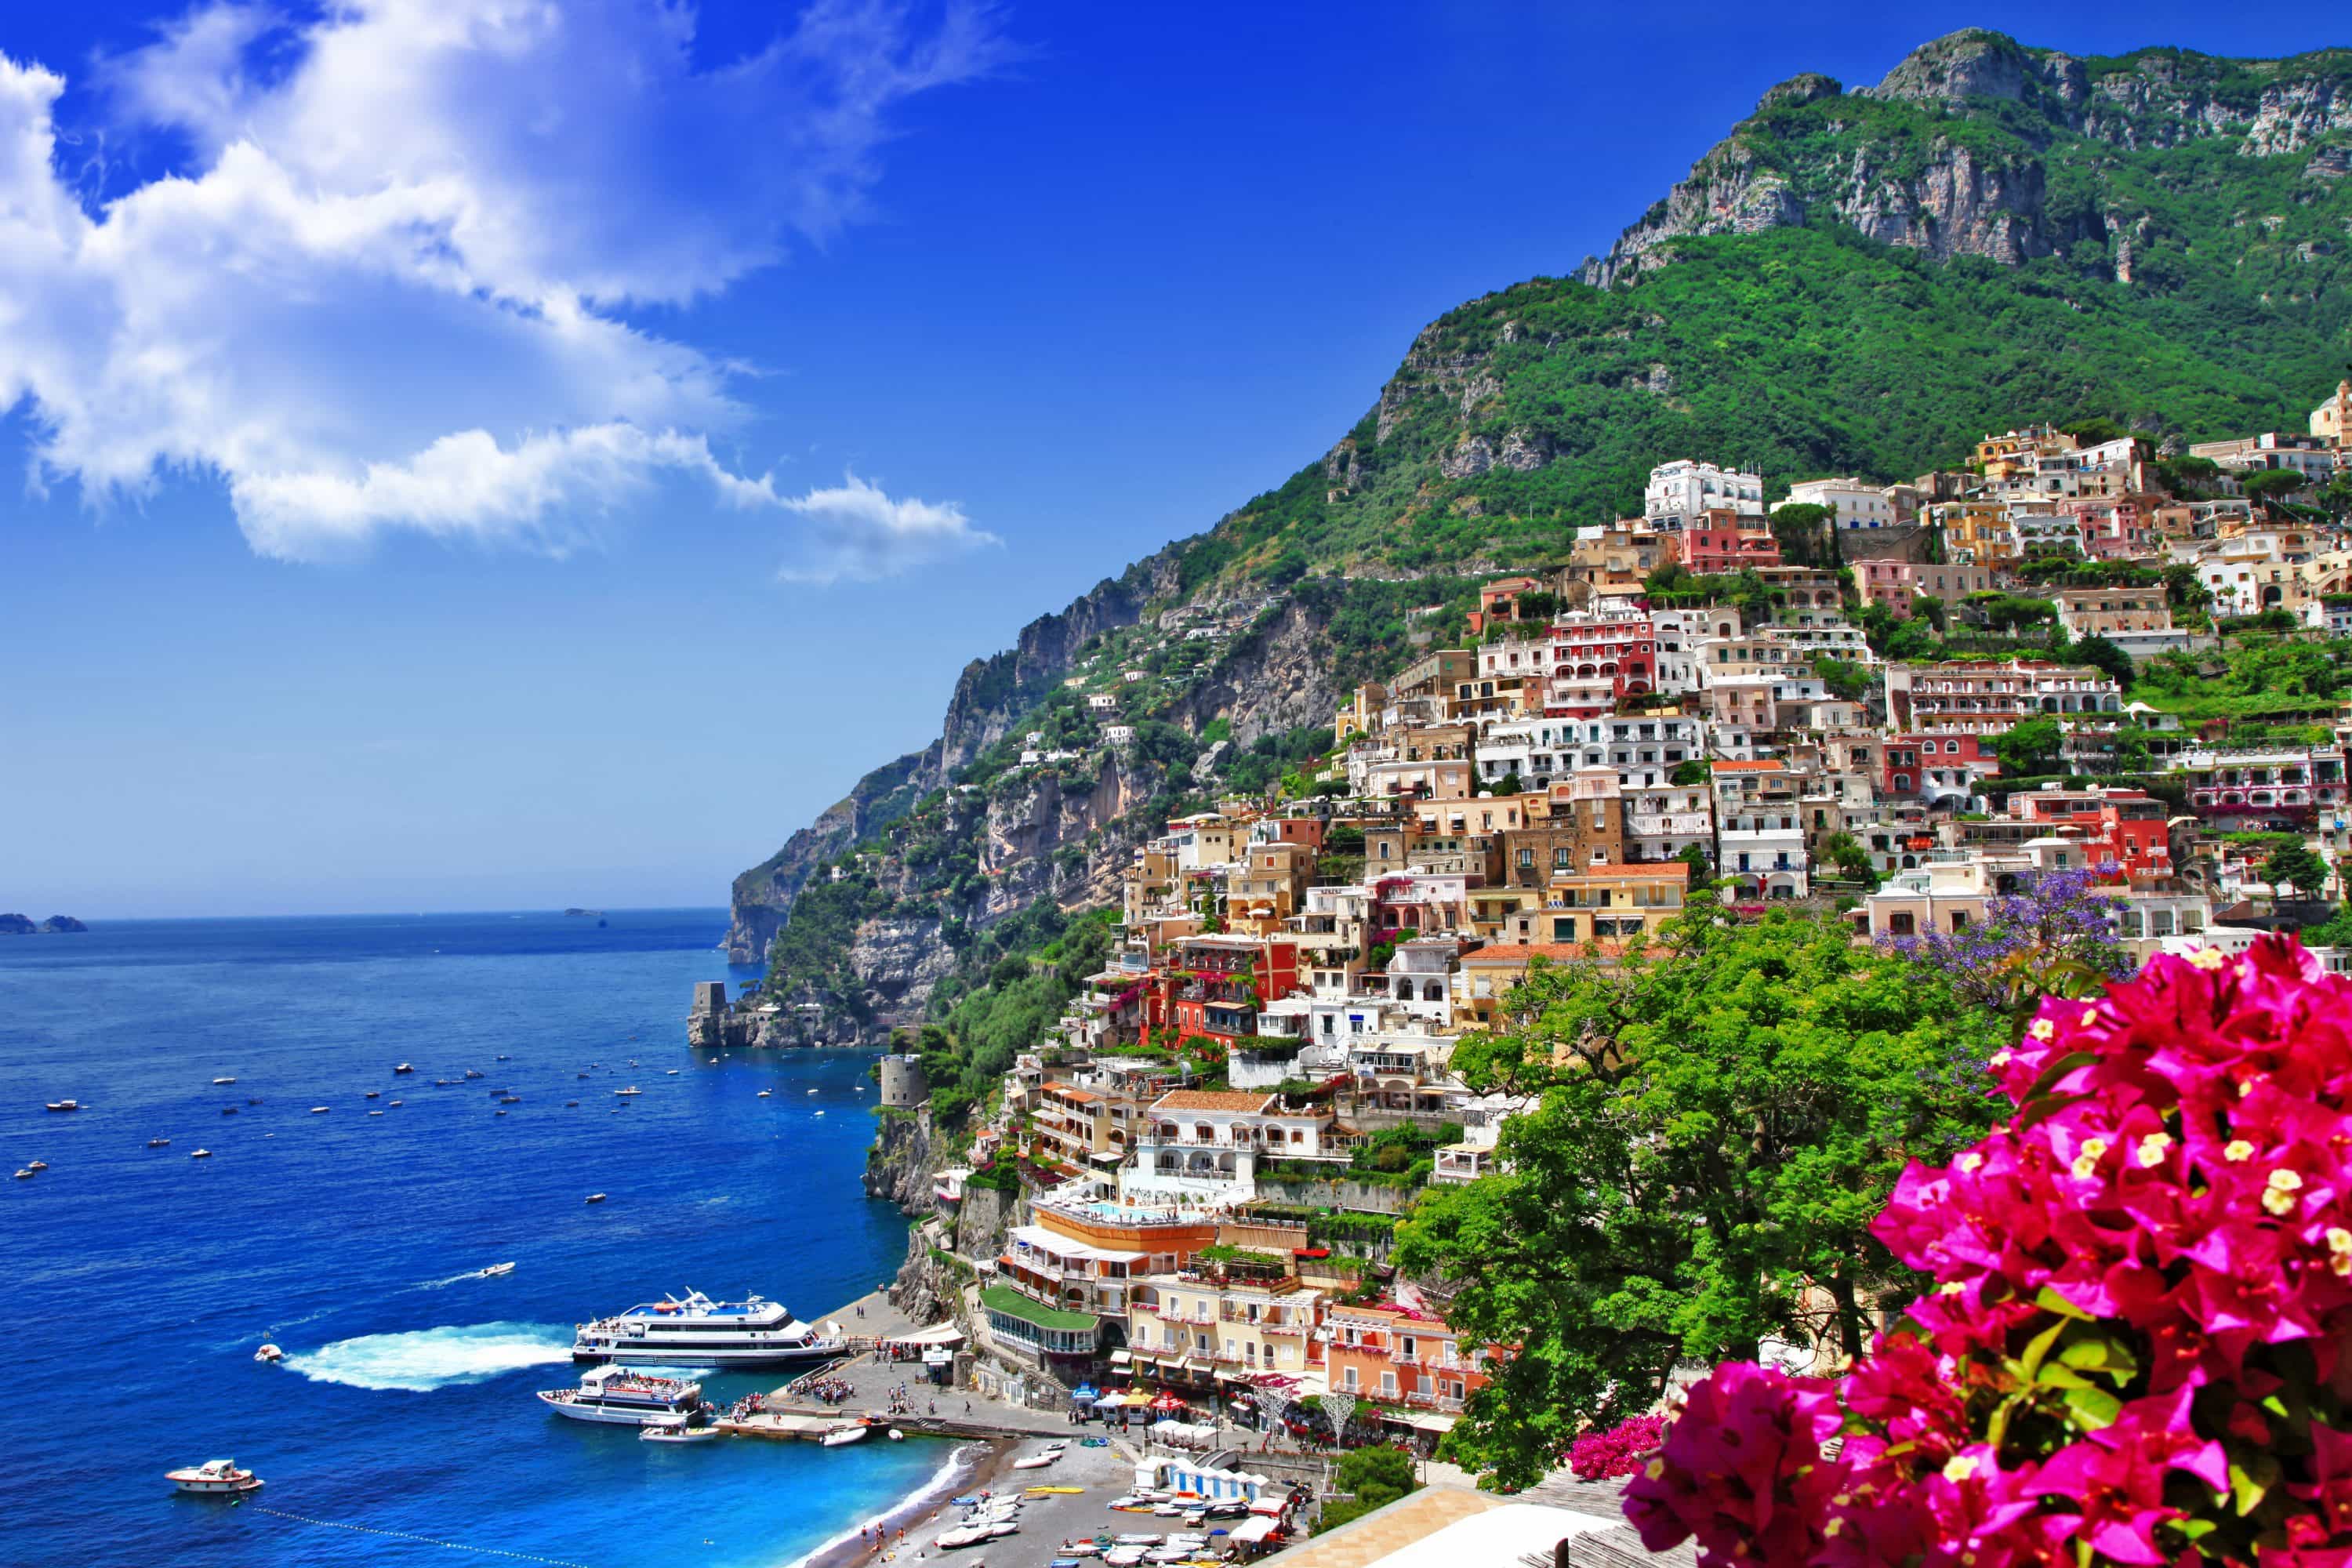 beautiful scenery of amalfi coast of Italy, Positano ...